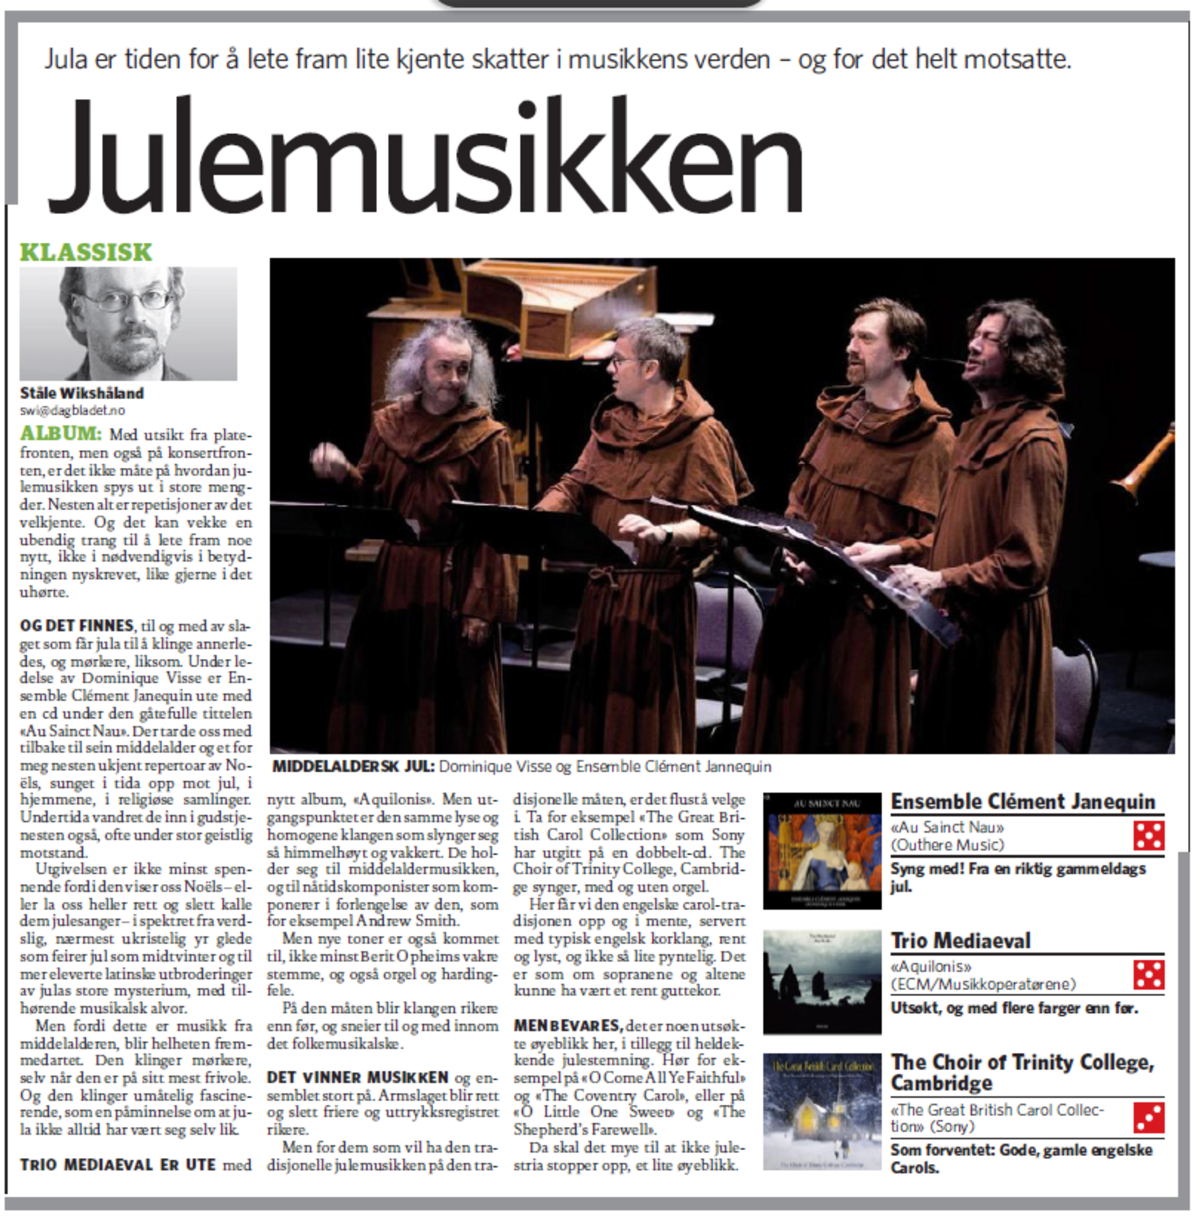 Aquilonis review in Dagbladet